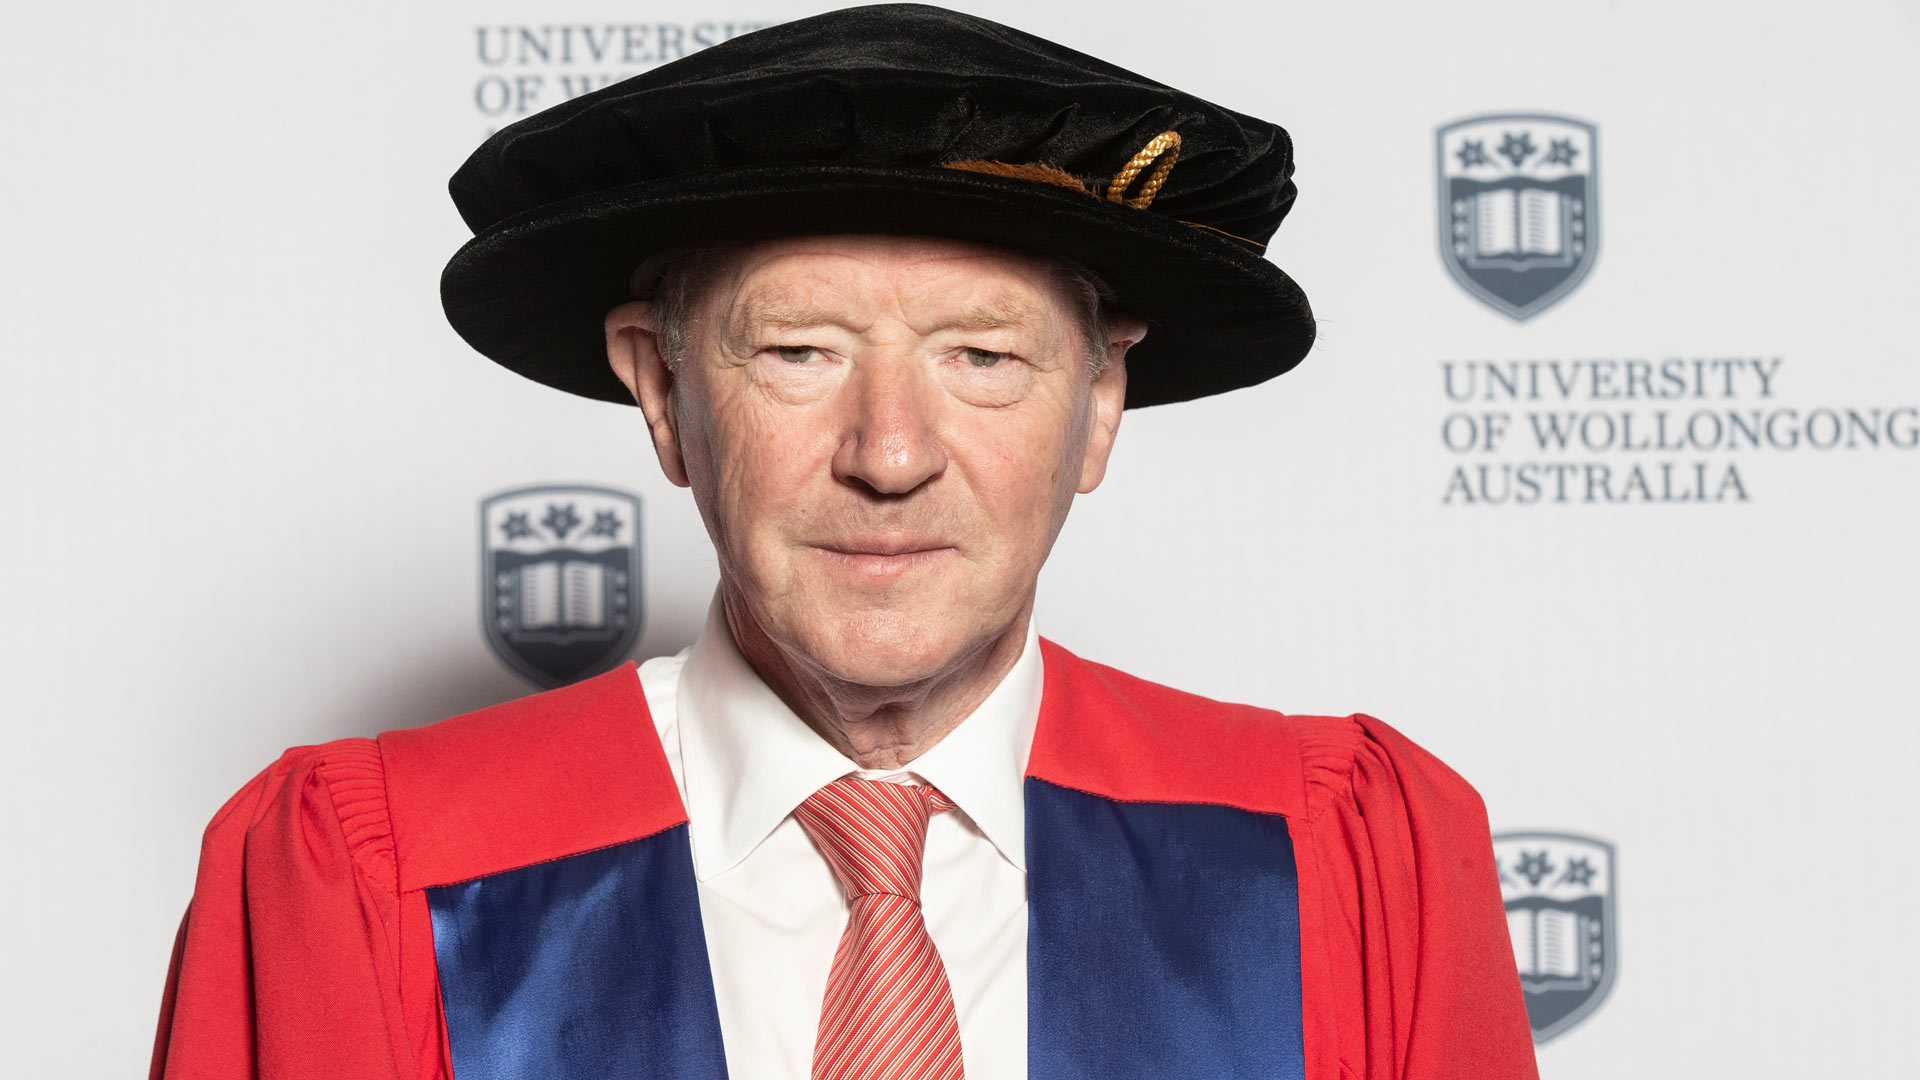 Honorary Doctorate recipient Dr Ian James Watt AC. Photo: Paul Jones